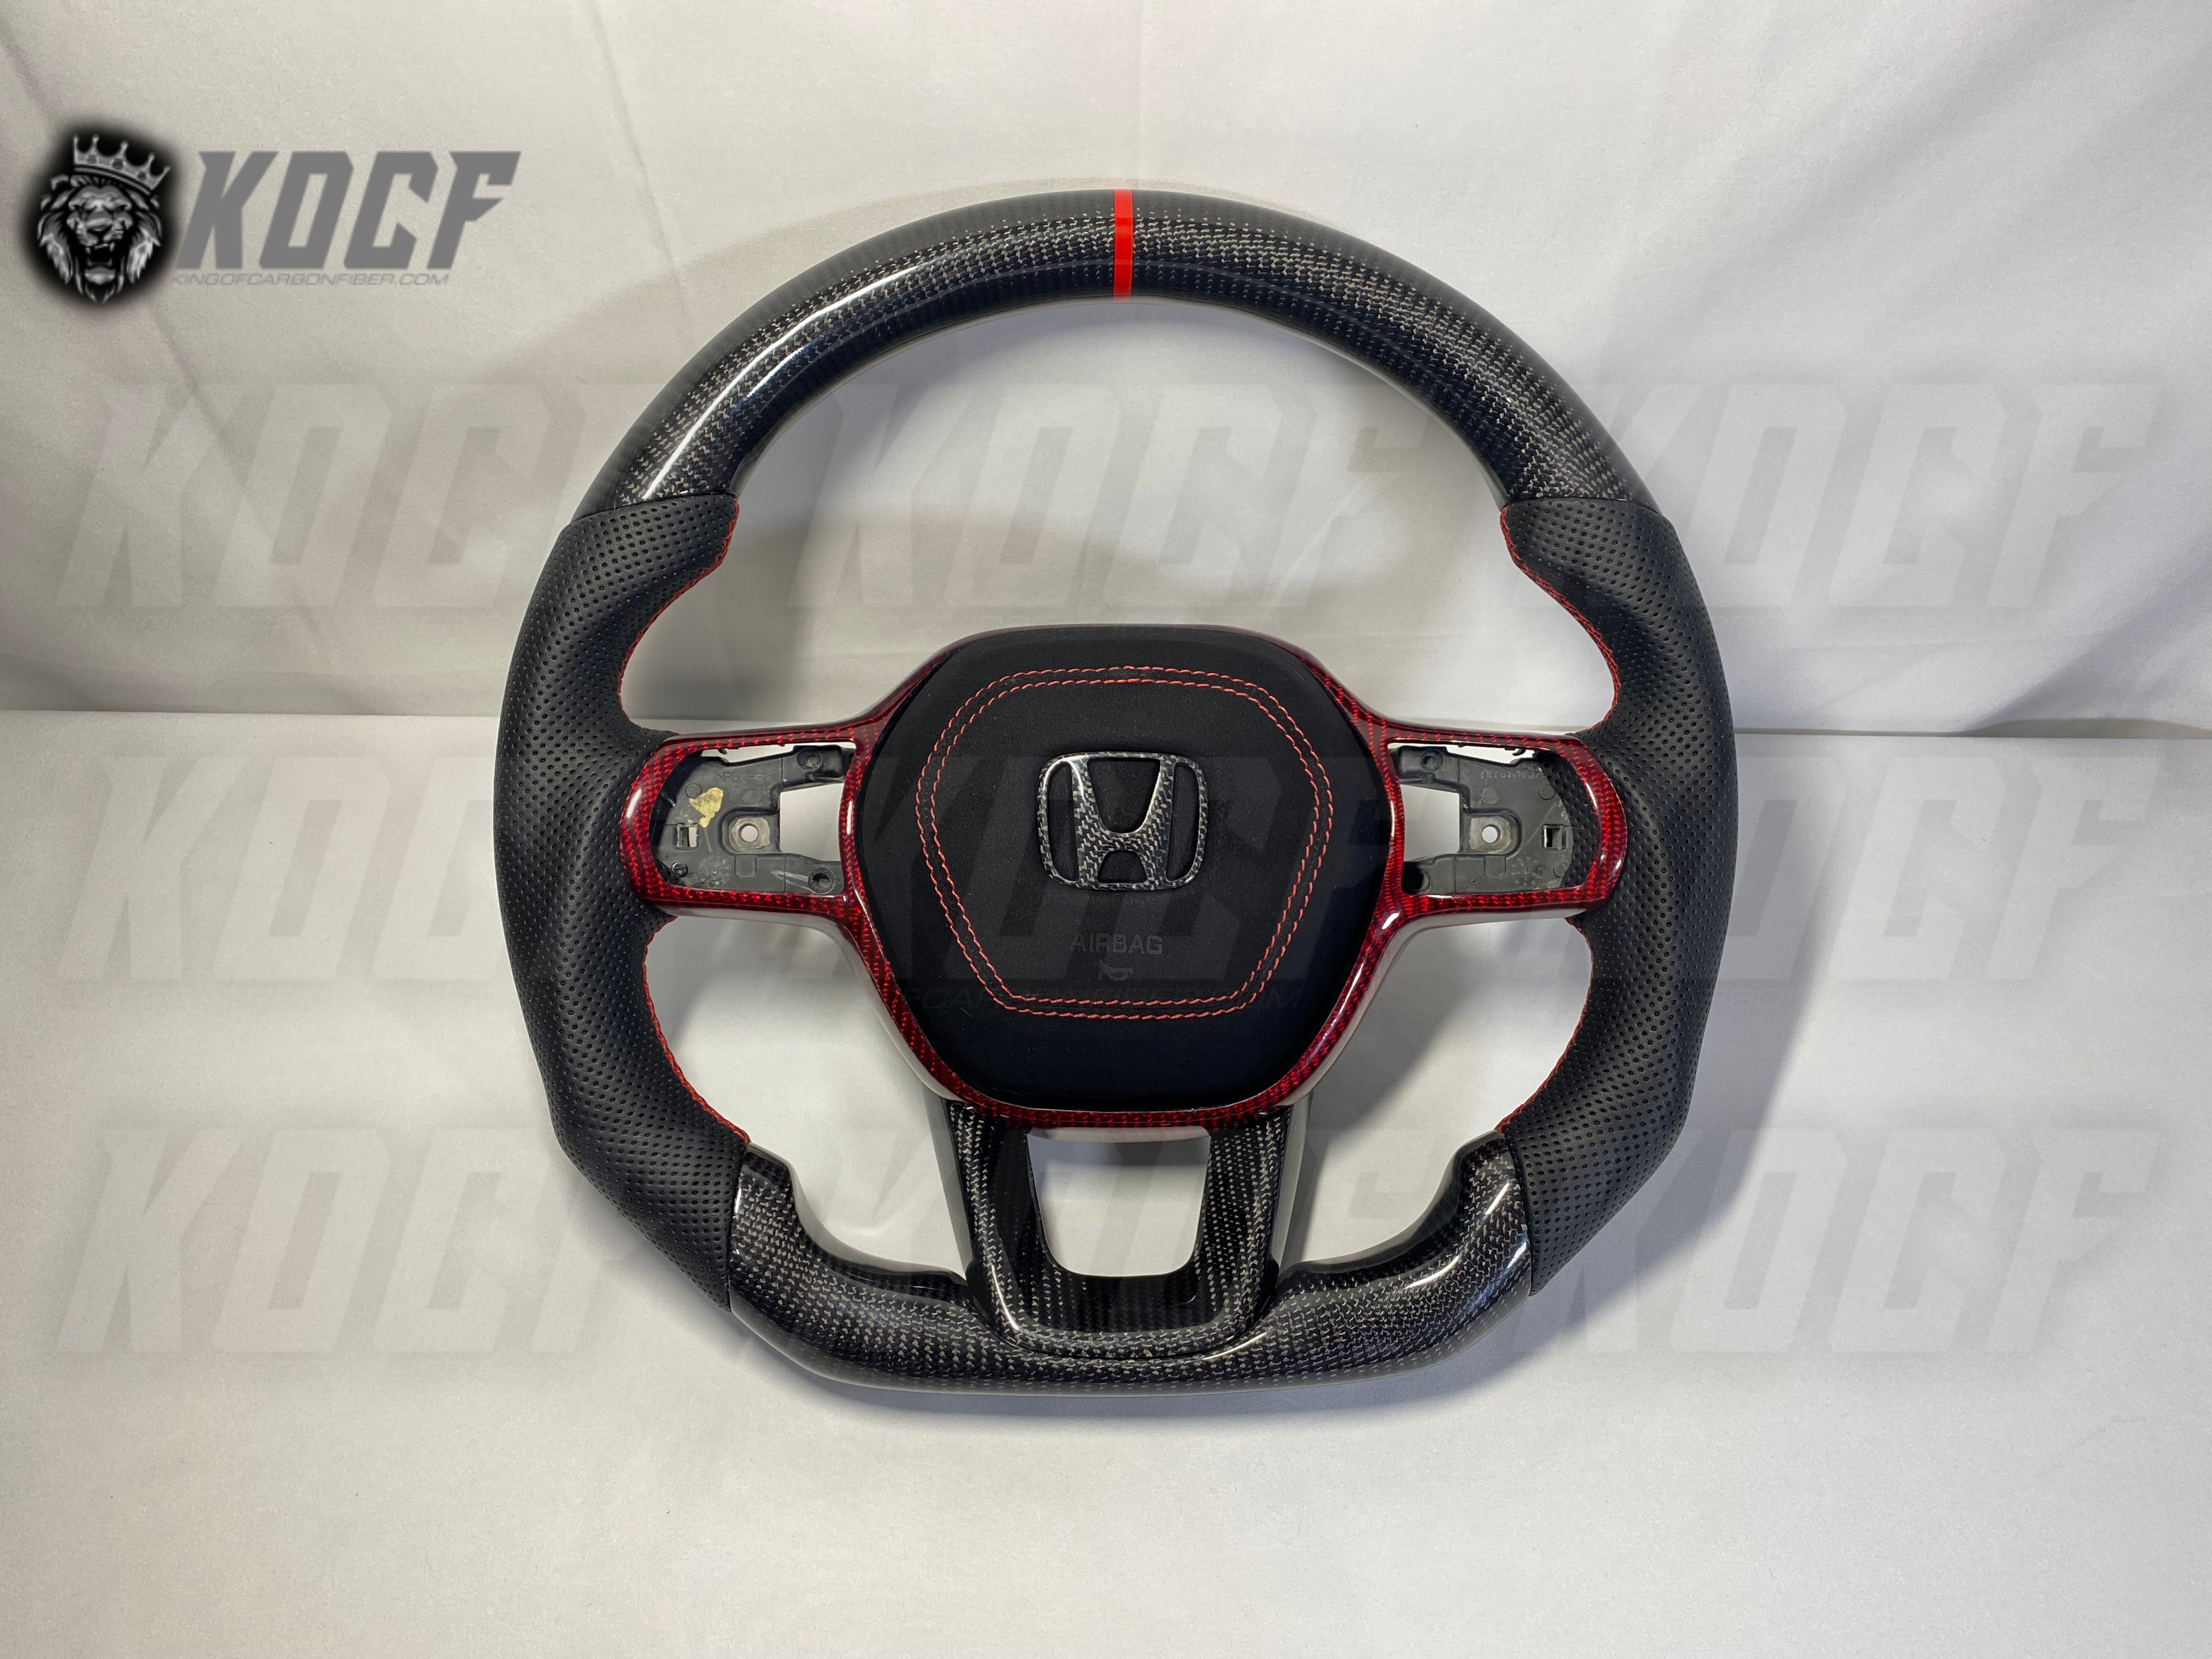 2022+ 11th Gen Civic Steering Wheel 11Gen Compatible  (Customizable) Real Carbon Fiber - KOCF.com - Car Parts